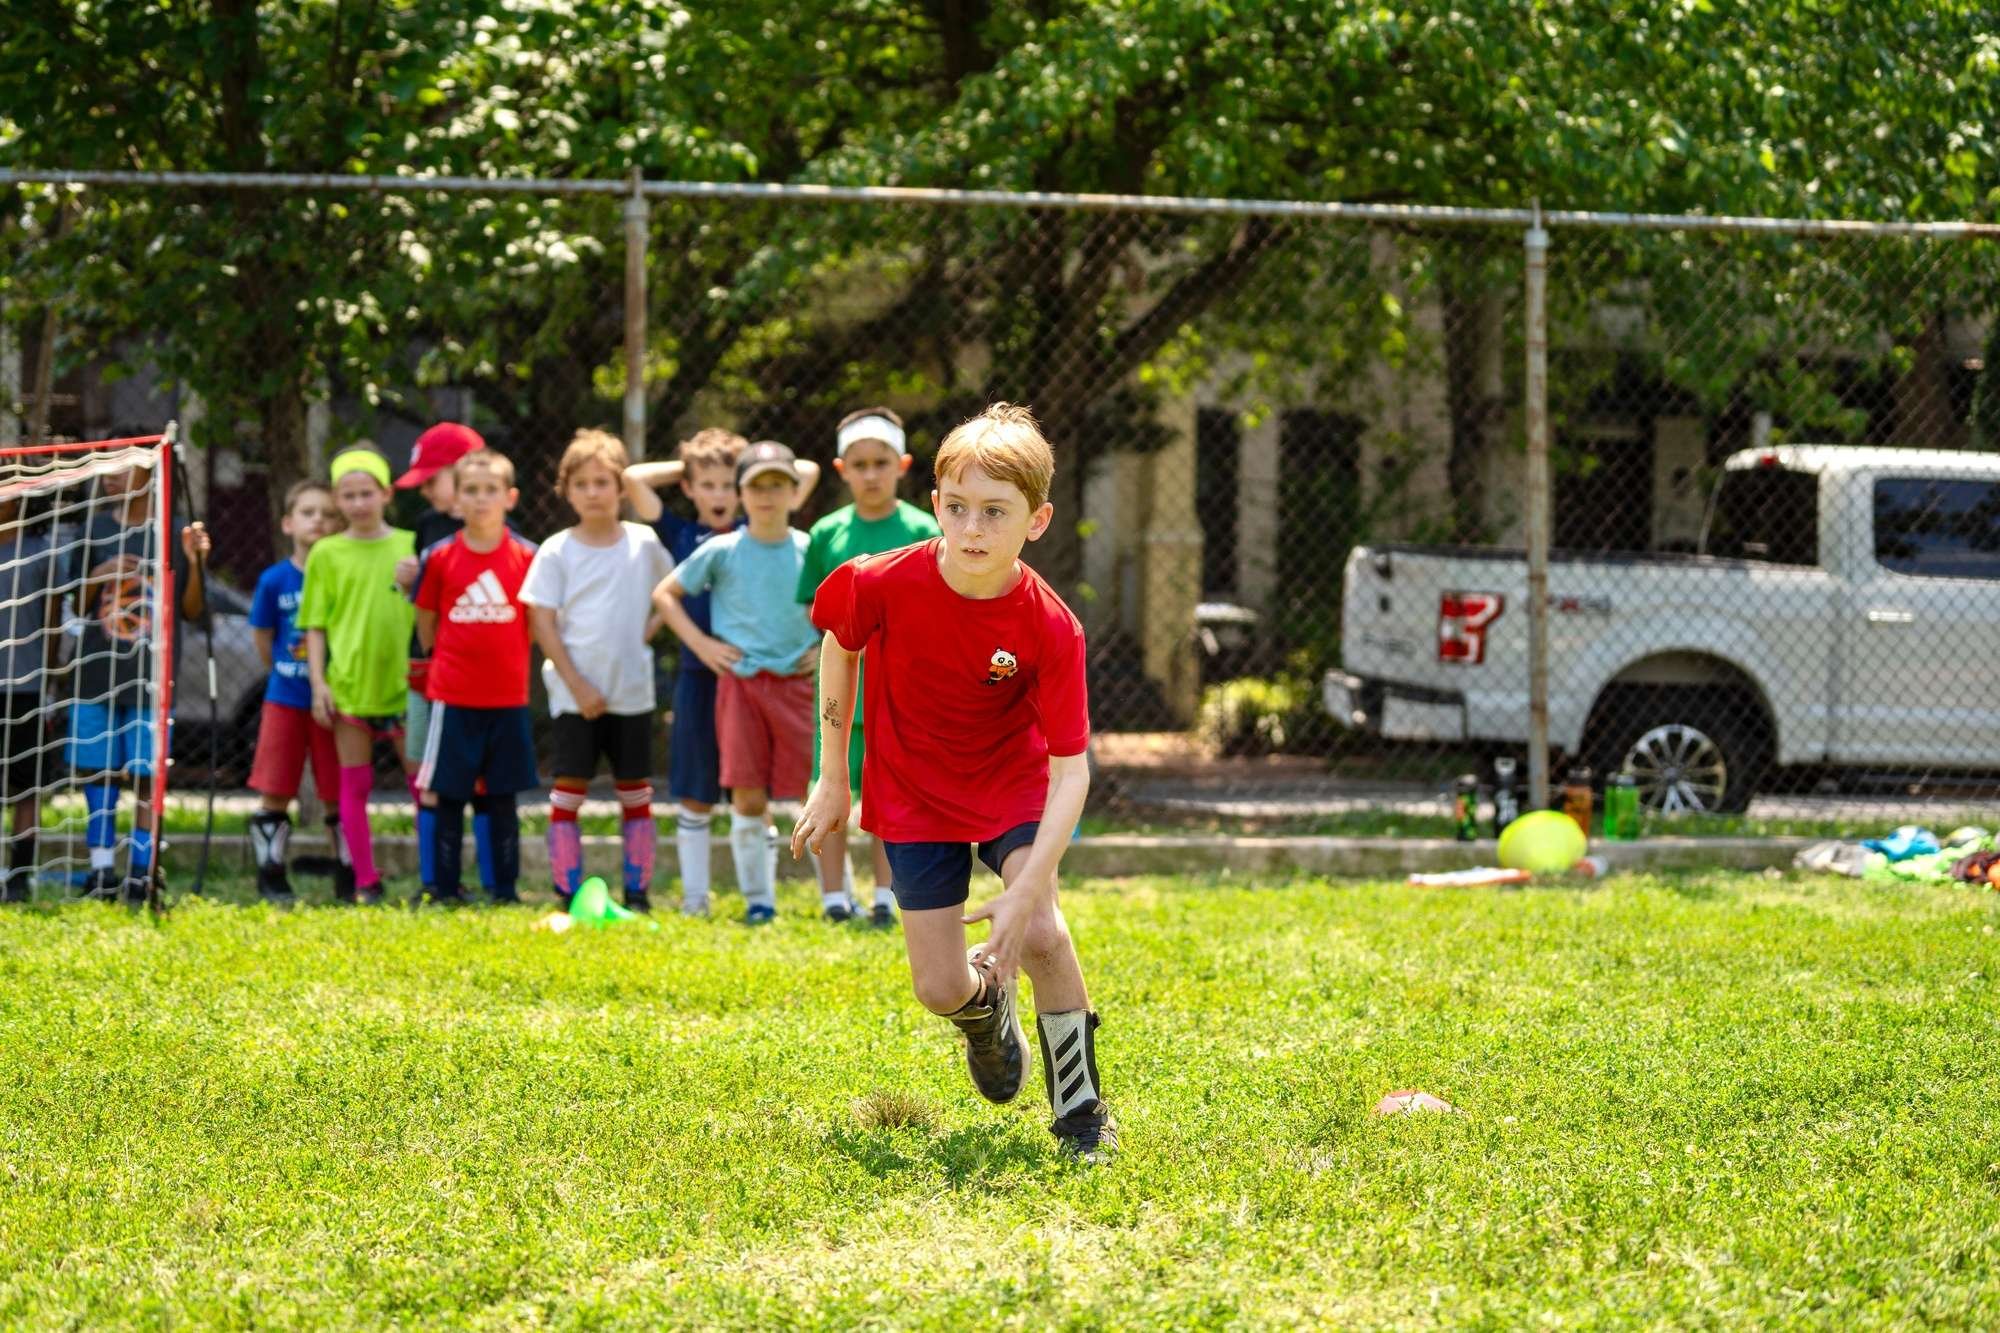 Dc-way-soccer-club-for-kids-in-washington-dc-summer-camp-at-tyler-elementary-school- 0129.jpg